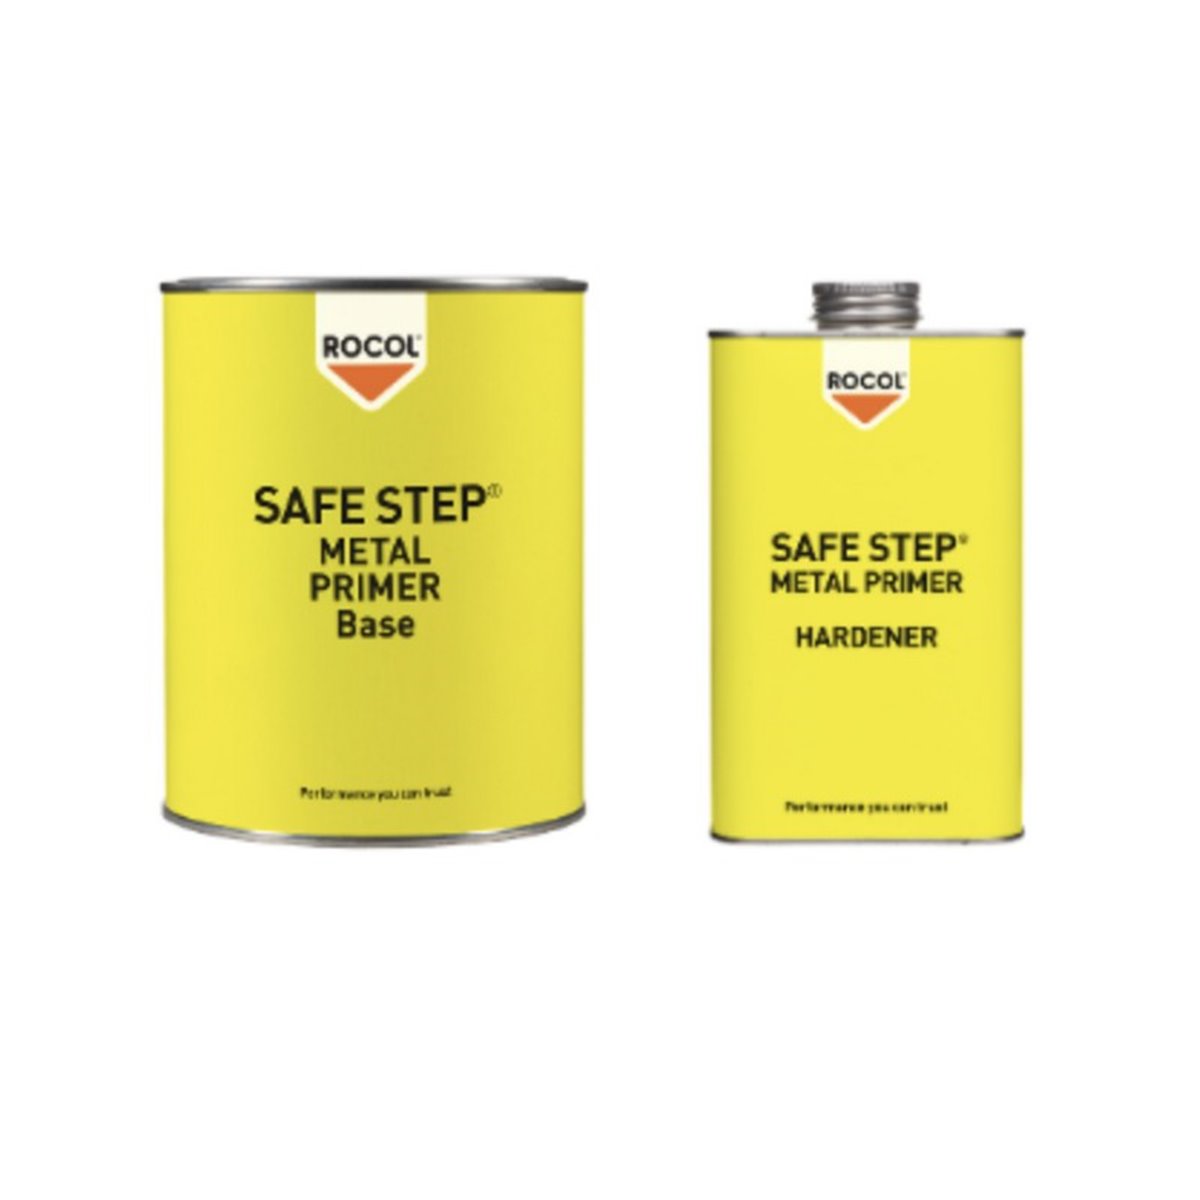 SAFE STEP METAL PRIMER ROCOL 750ML RS43265